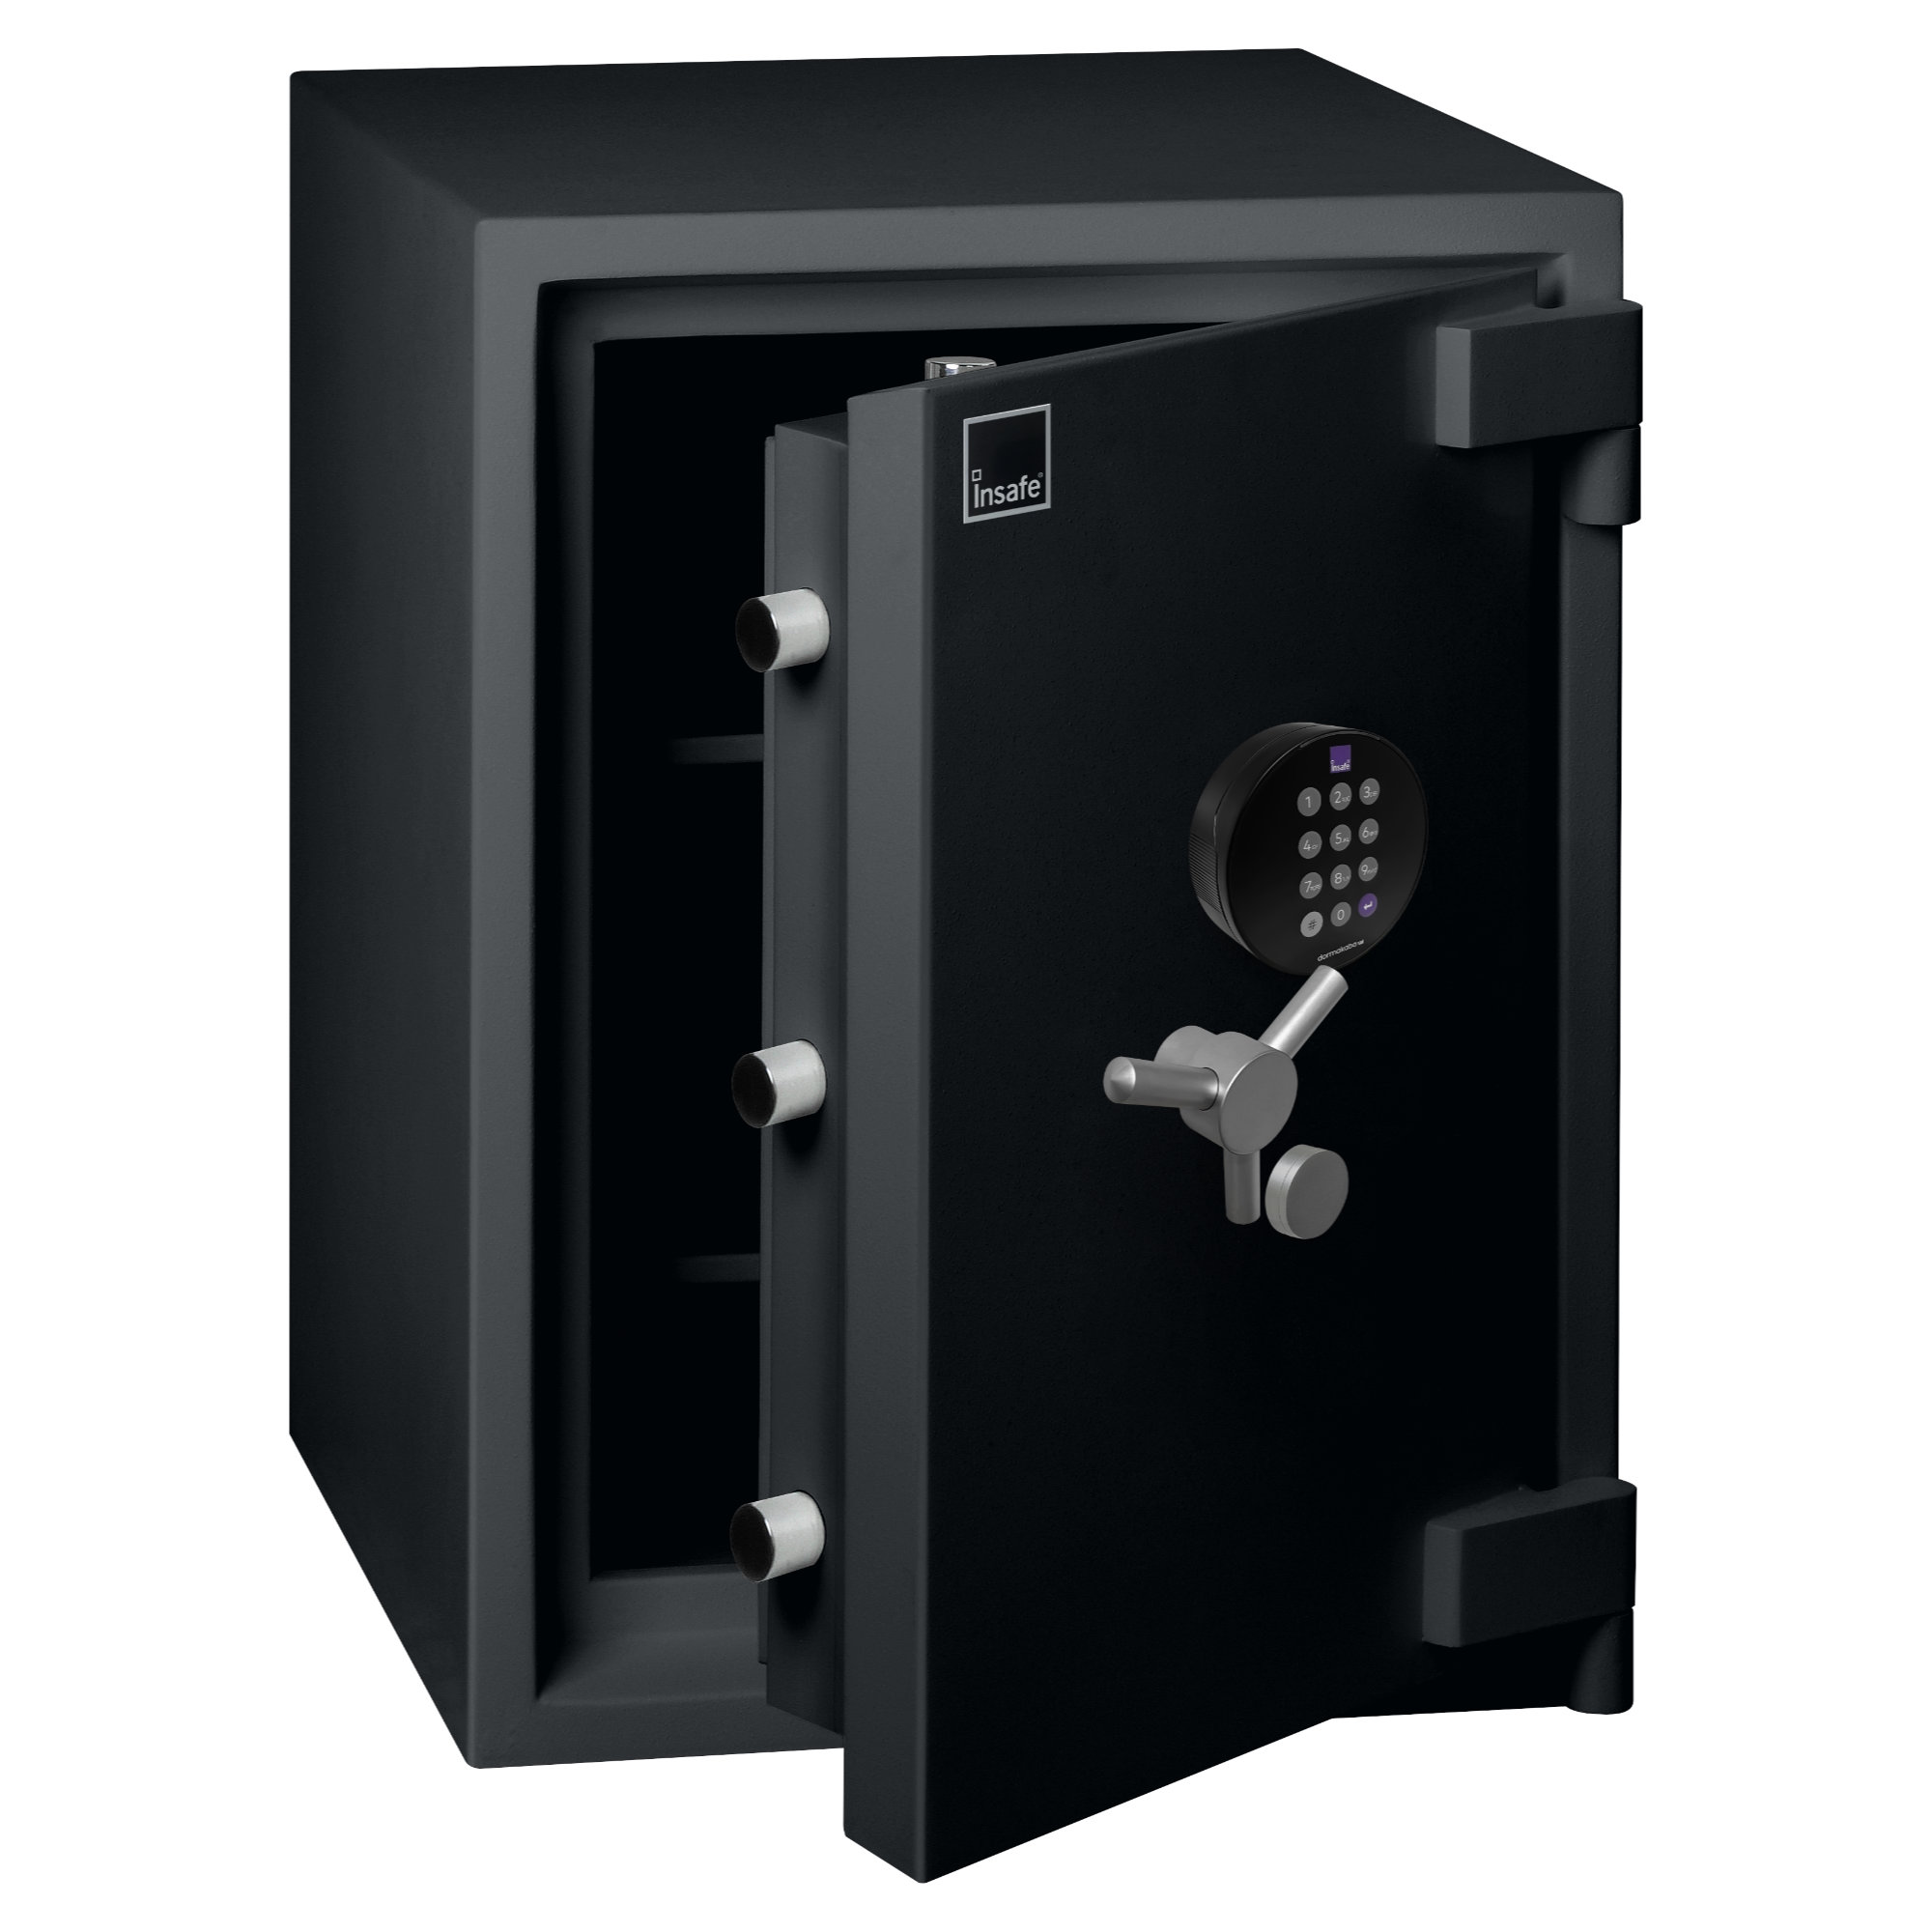 Insafe Grade V • Size 110 • Electronic Locking Safe